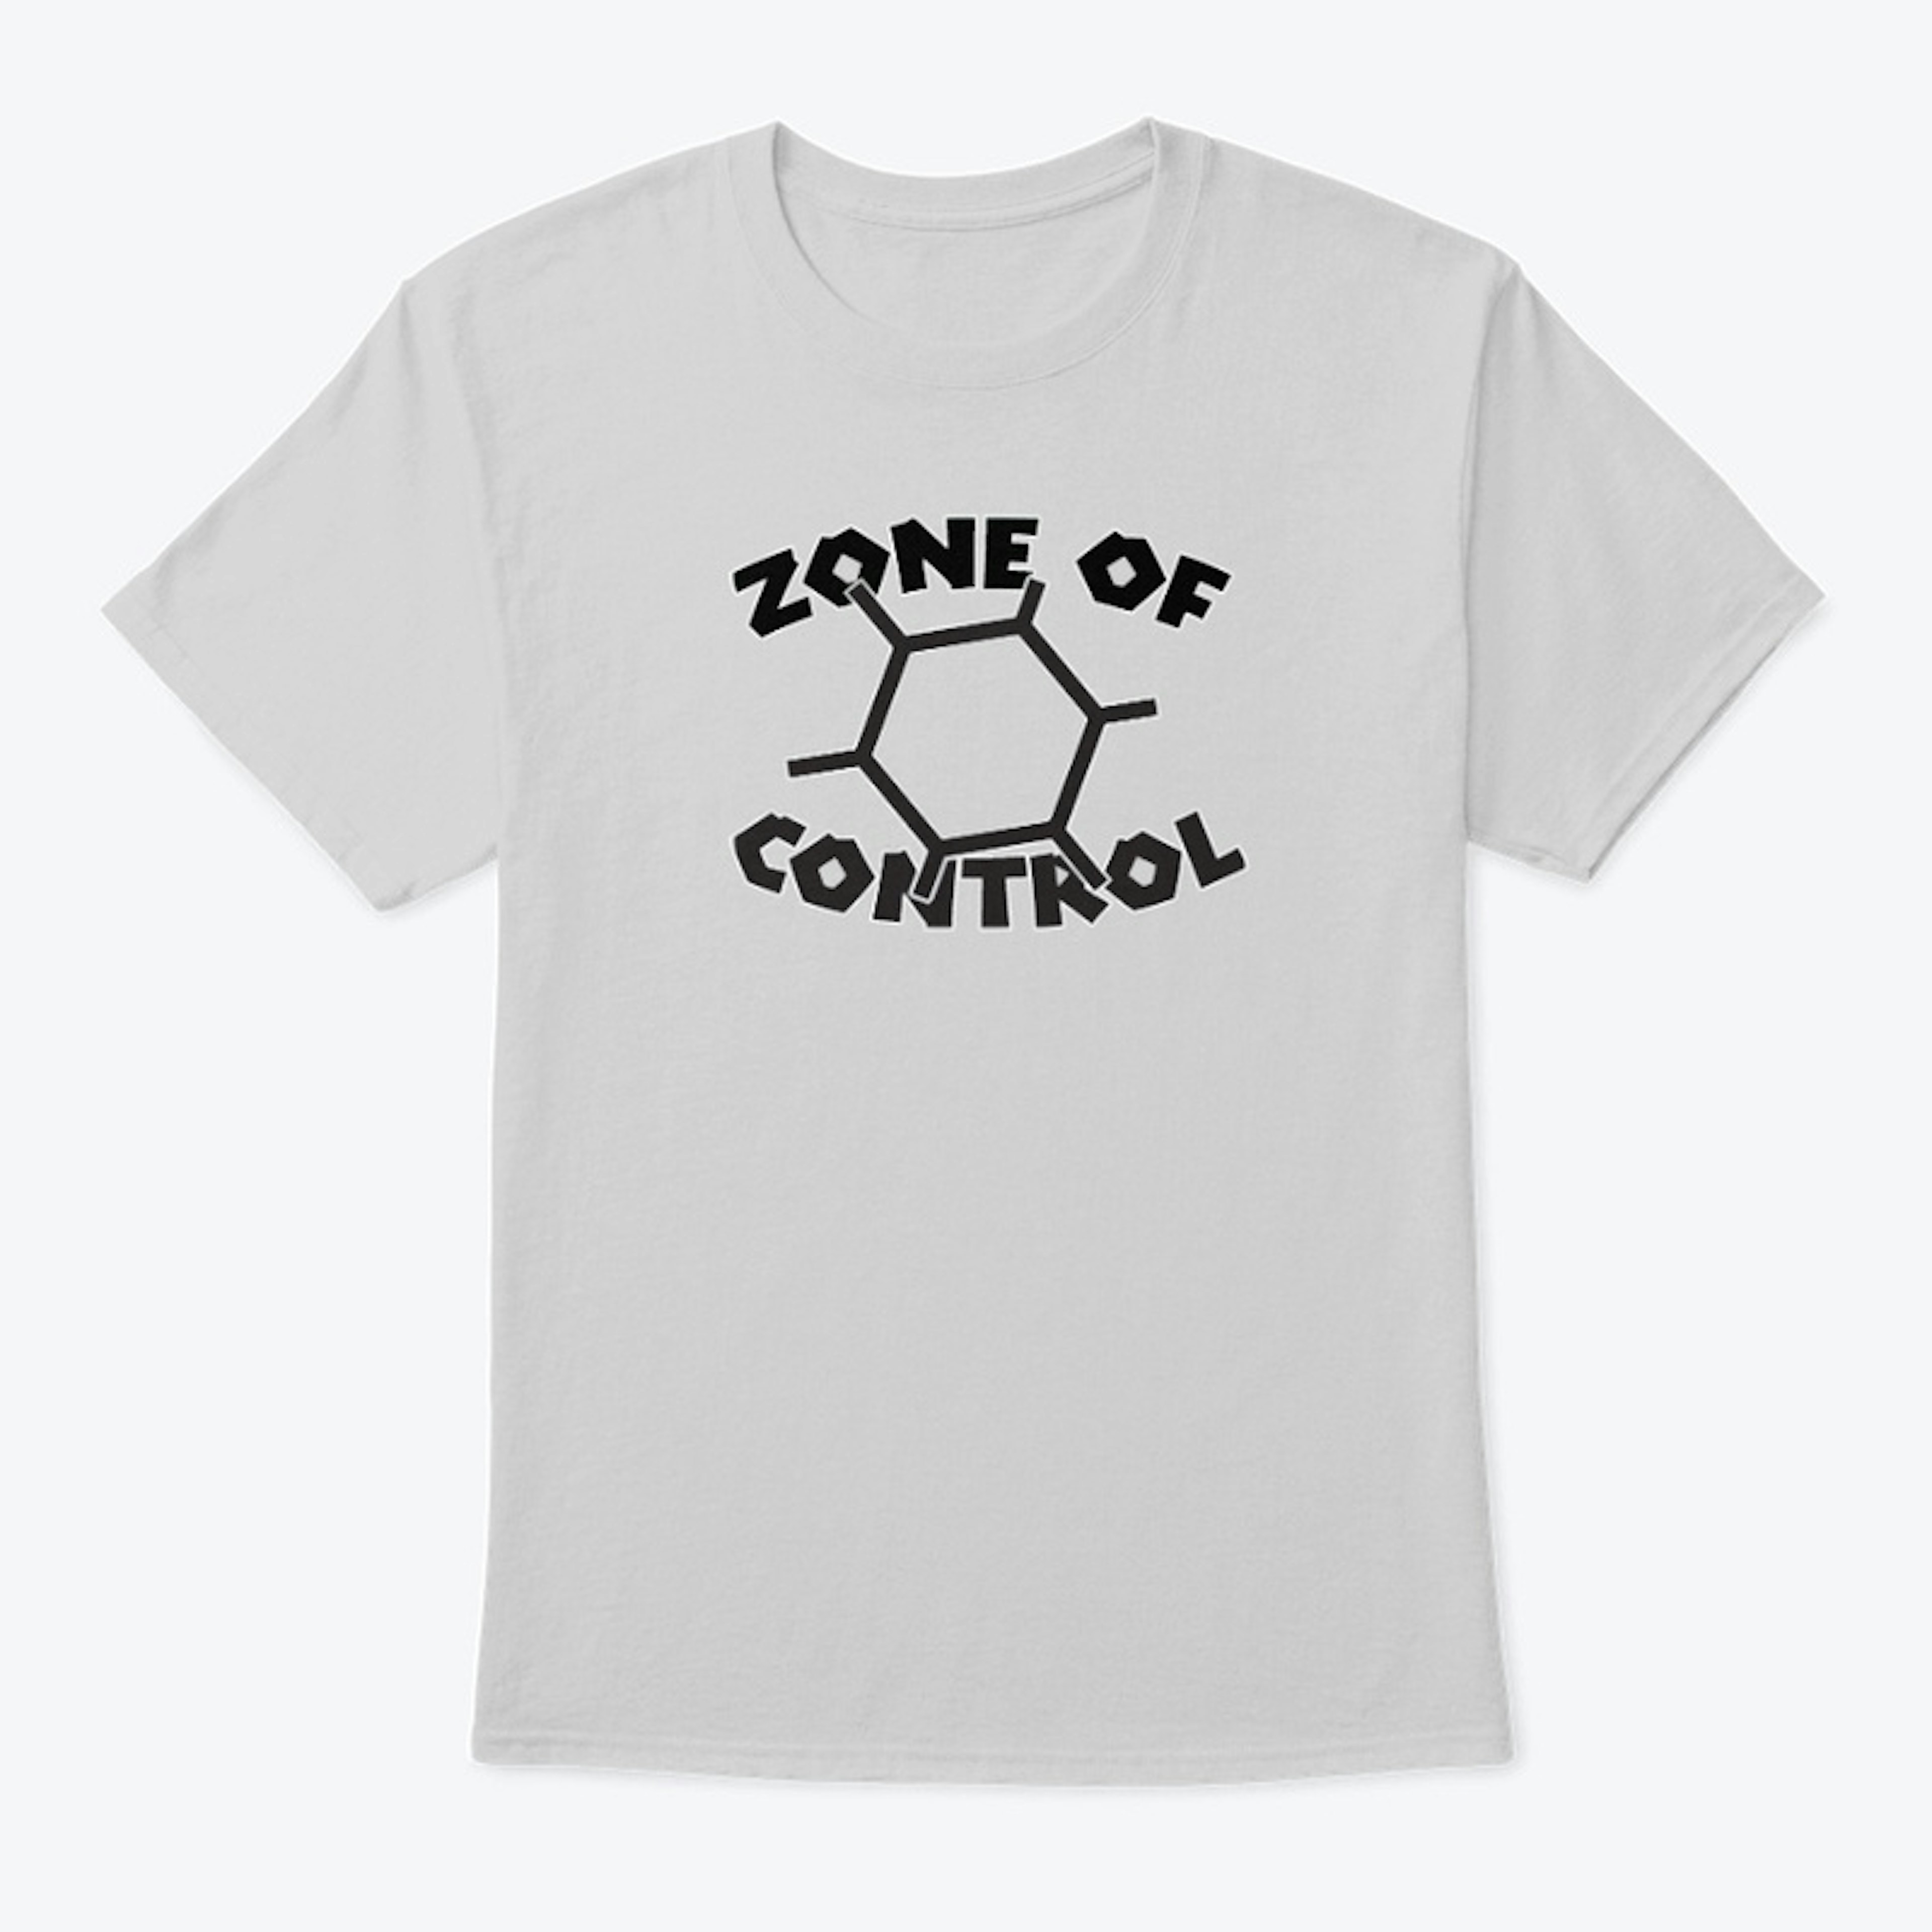 Zone of Control